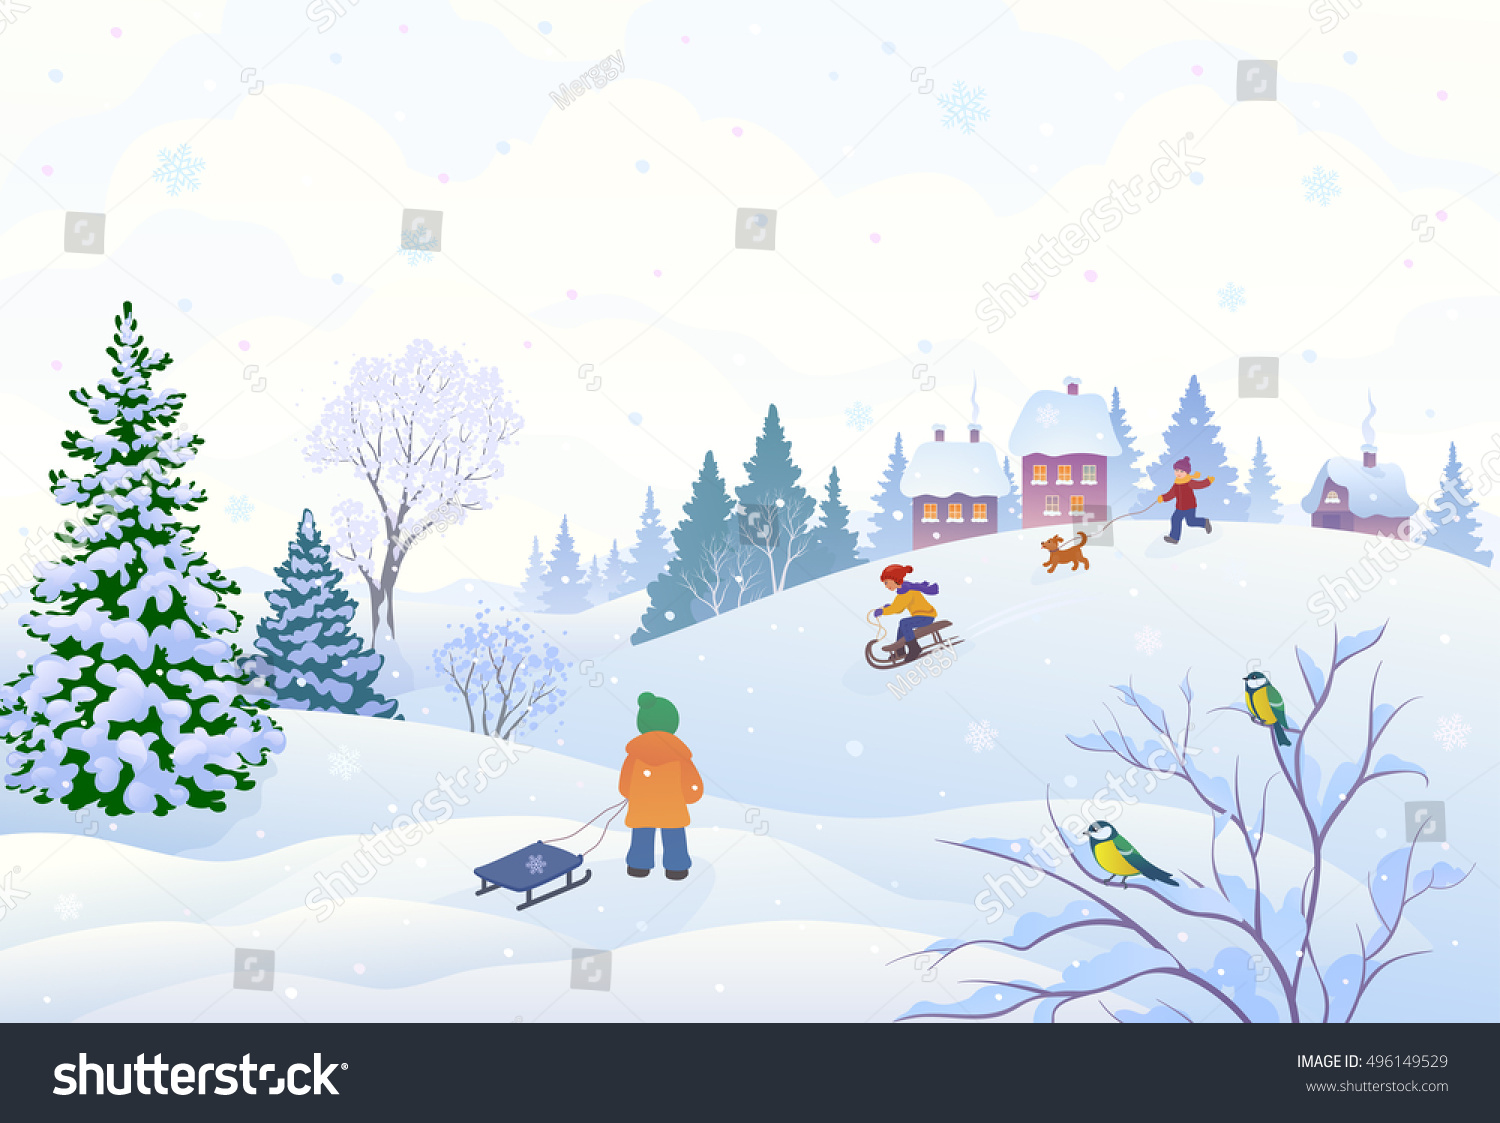 snowy village clipart - photo #39